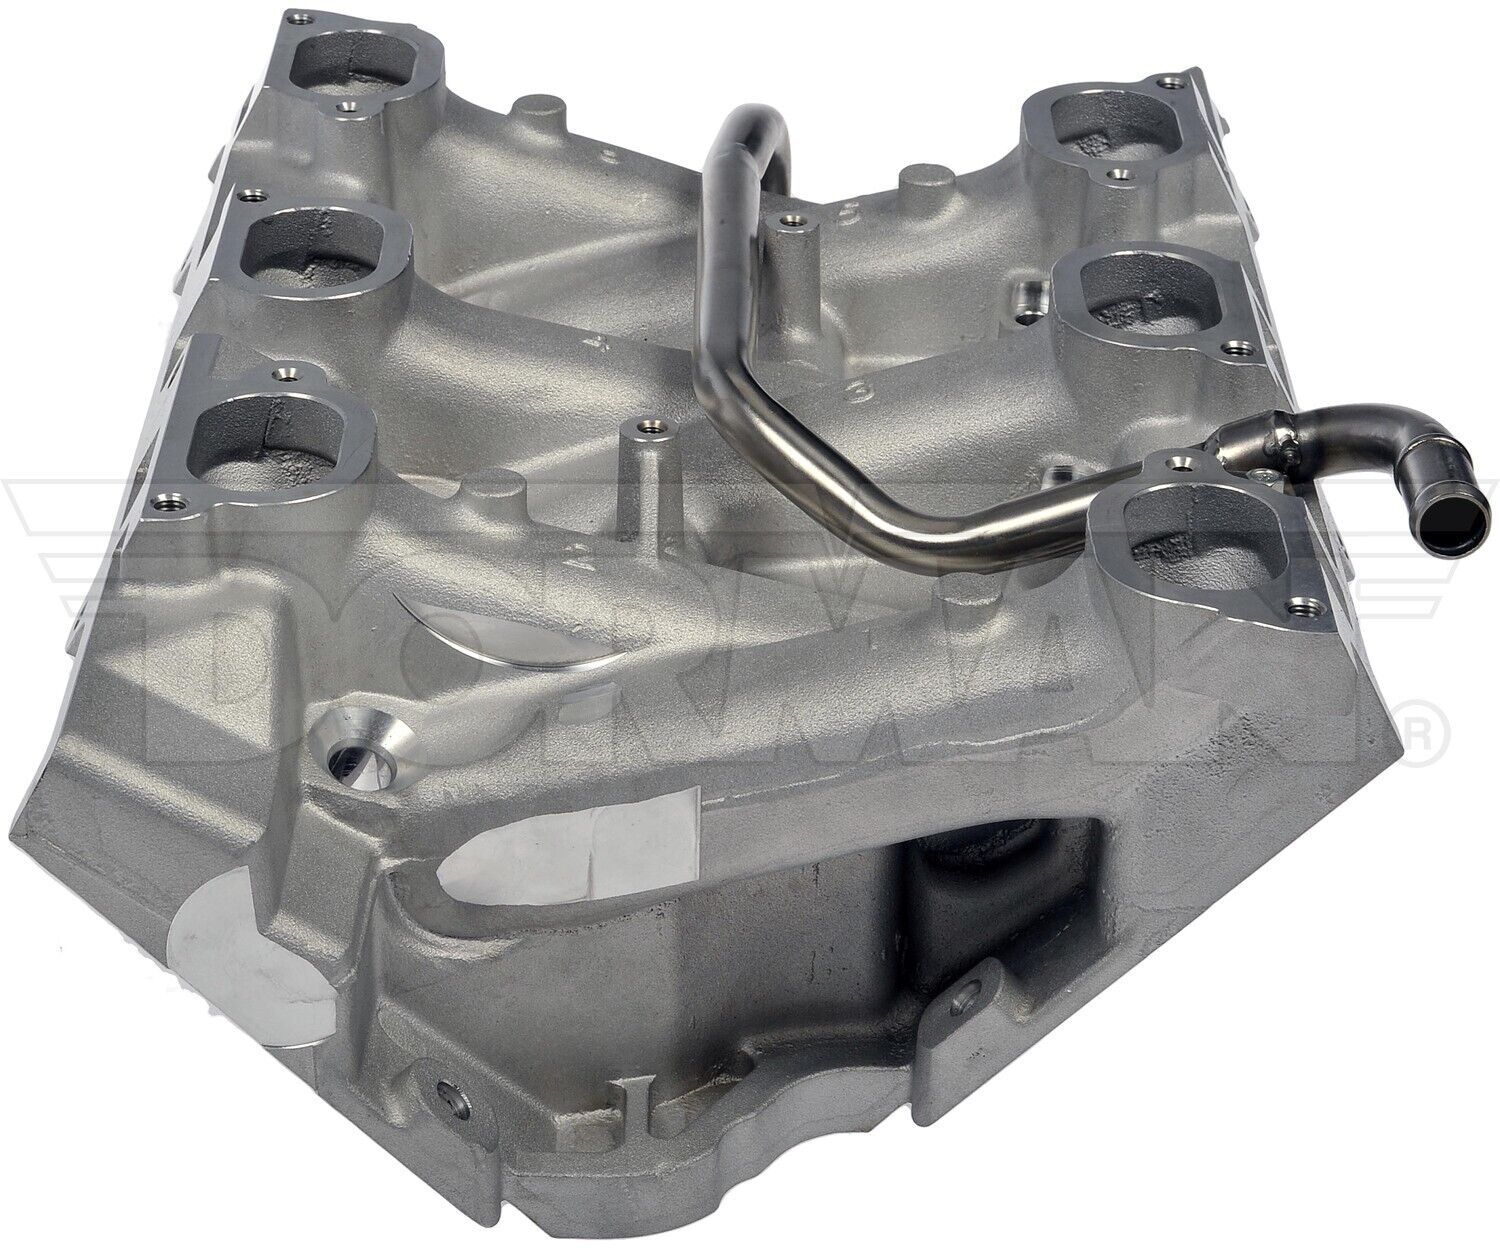 Dorman Engine Intake Manifold Lower Fits 2000-2005 Chevrolet Venture 3.4L V6